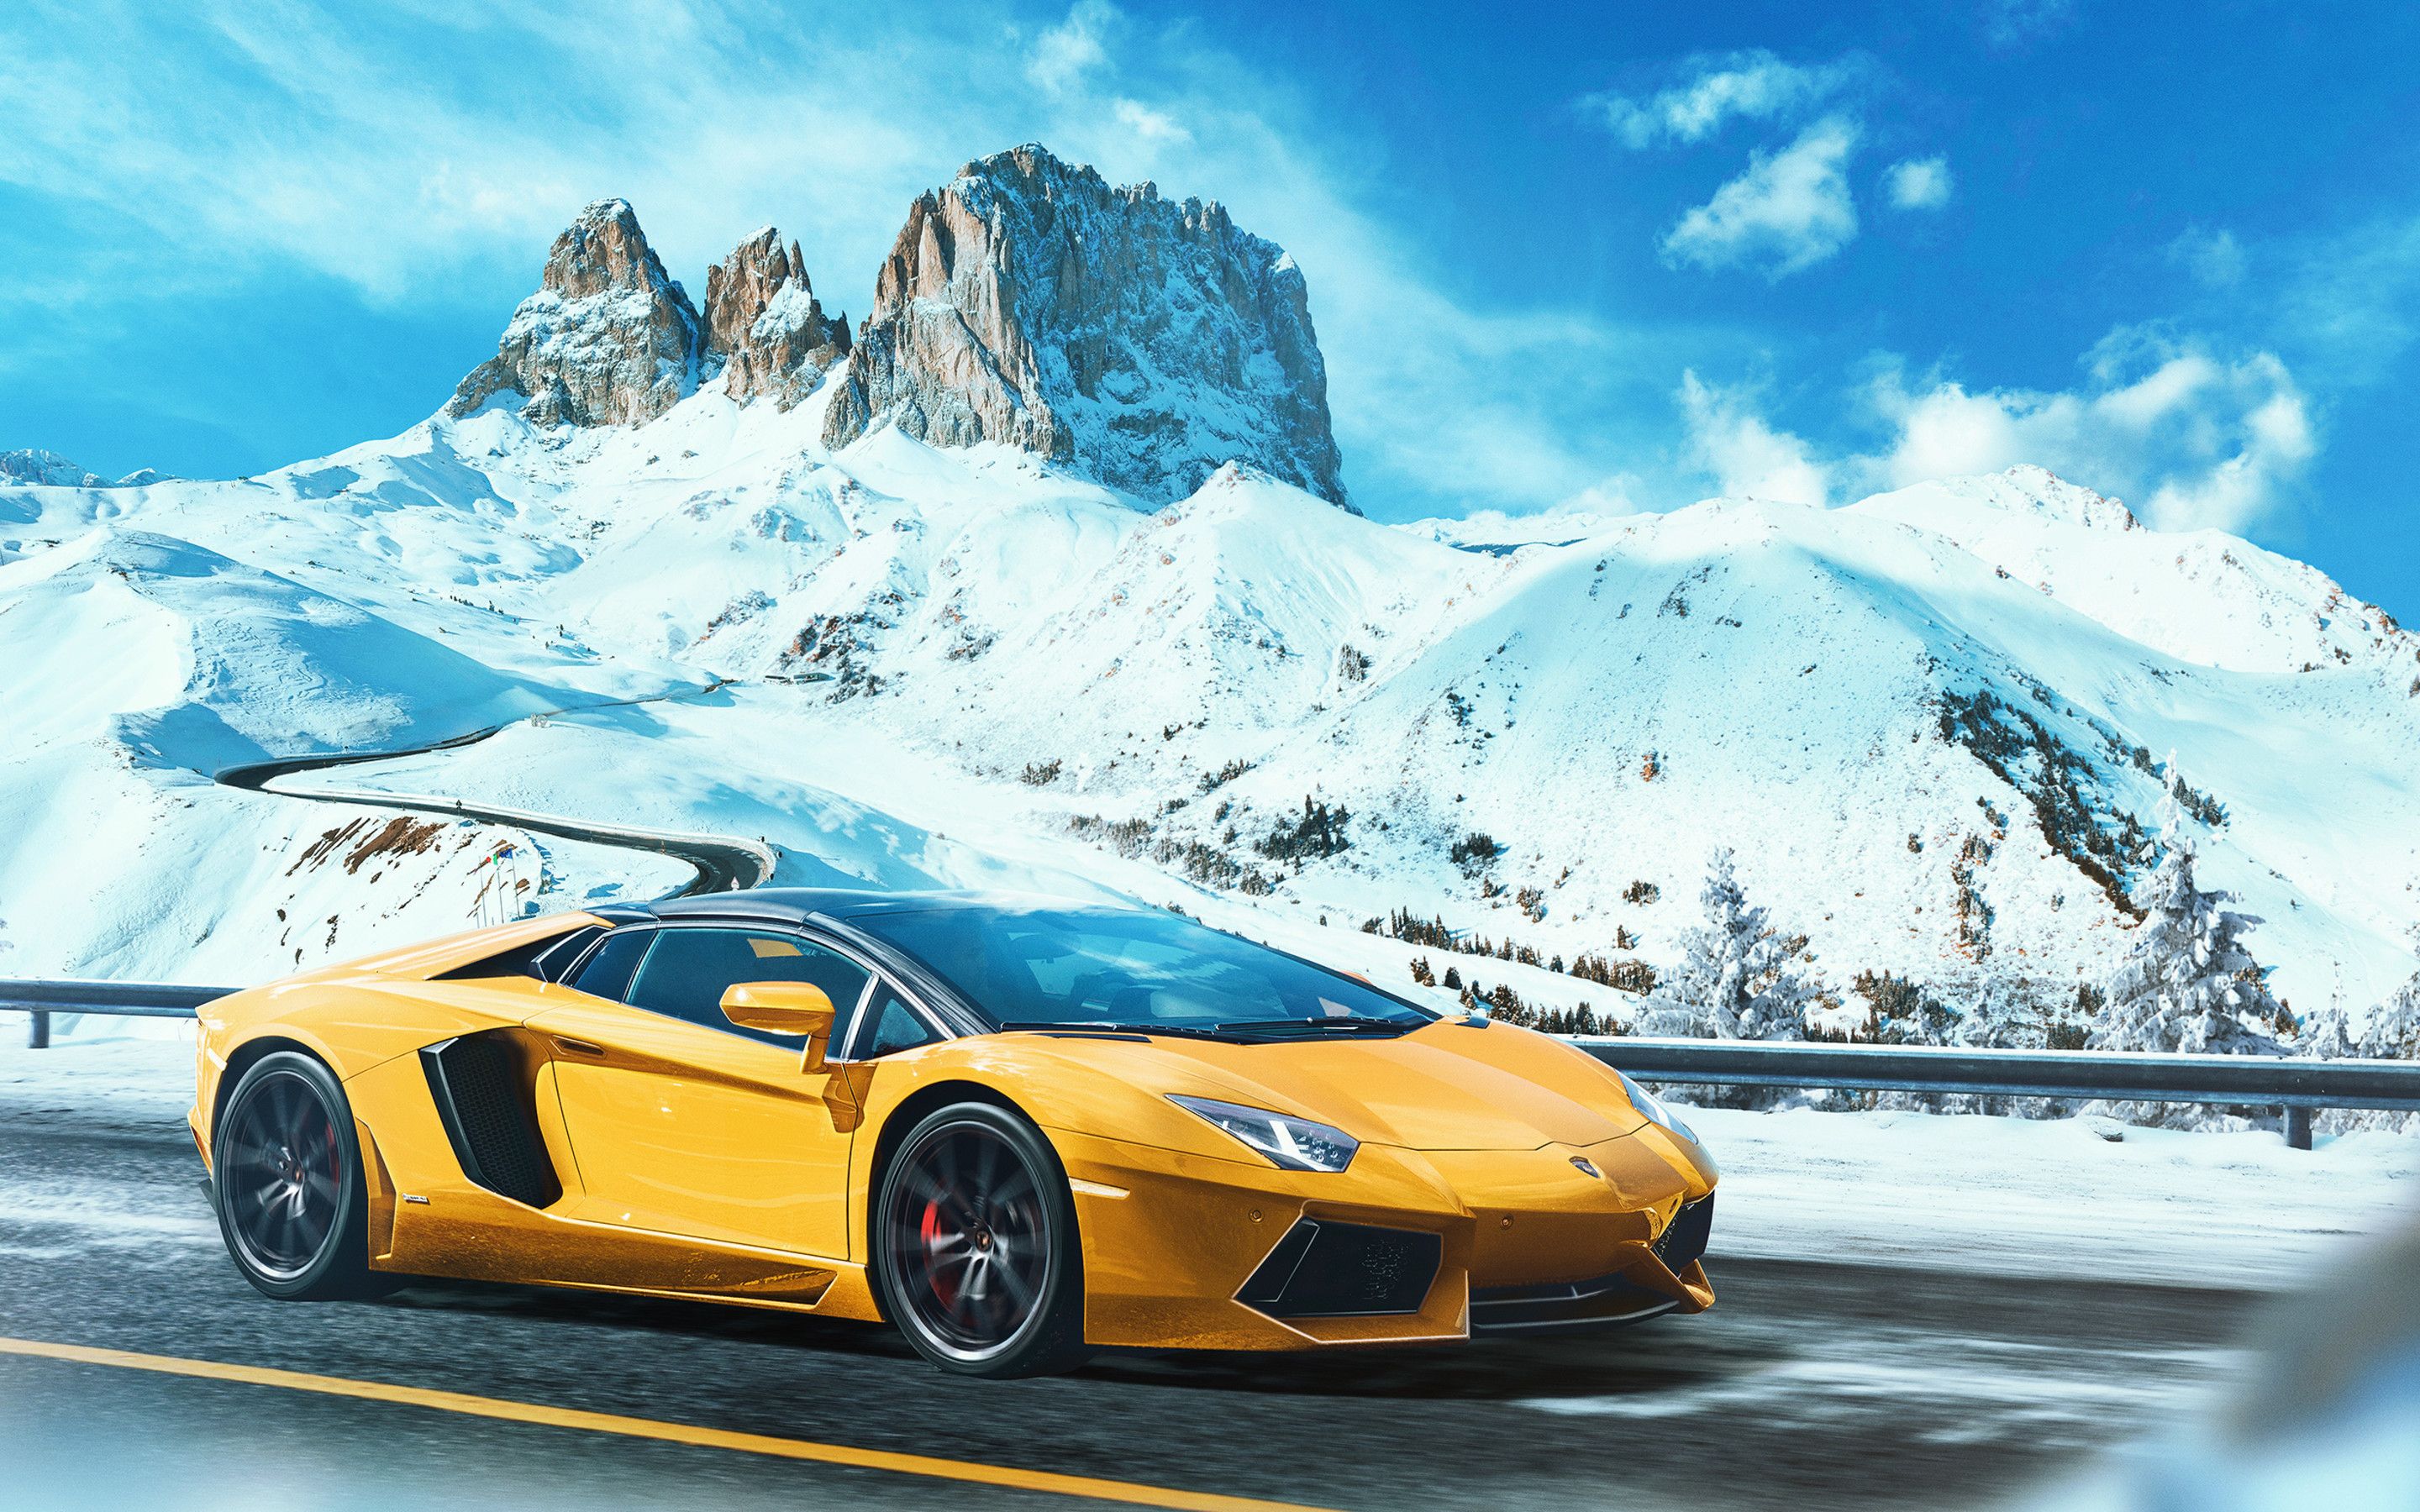 Download wallpaper Lamborghini Aventador, winter, 2018 cars, mountain road, supercars, yellow Aventador, Lamborghini for desktop with resolution 2880x1800. High Quality HD picture wallpaper